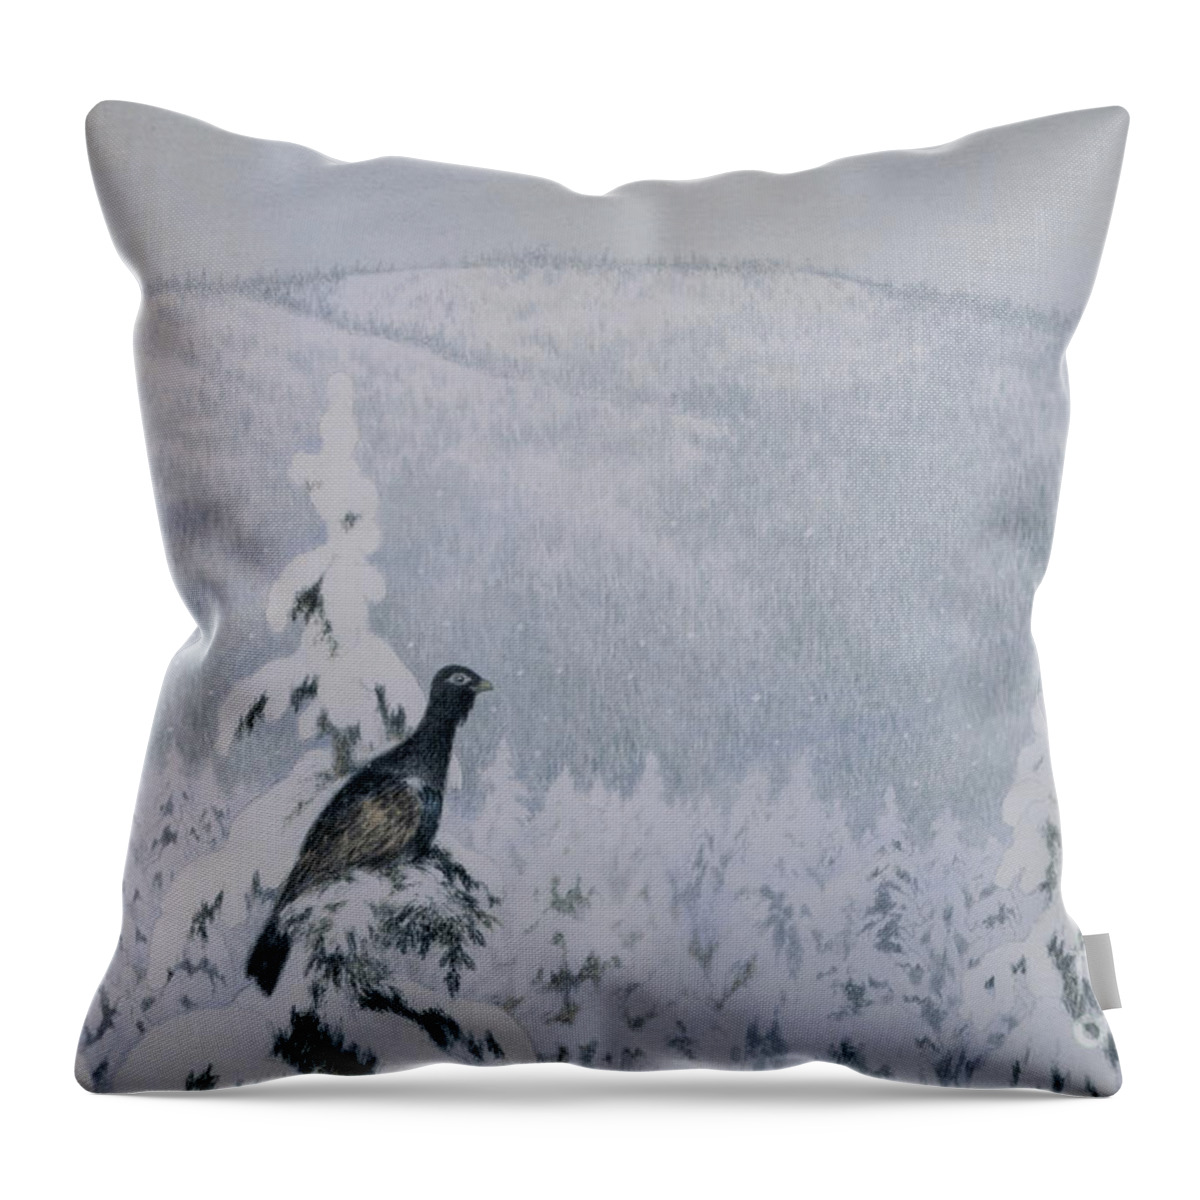 Theodor Kittelsen Throw Pillow featuring the painting Snowing and snowing by Theodor Kittelsen